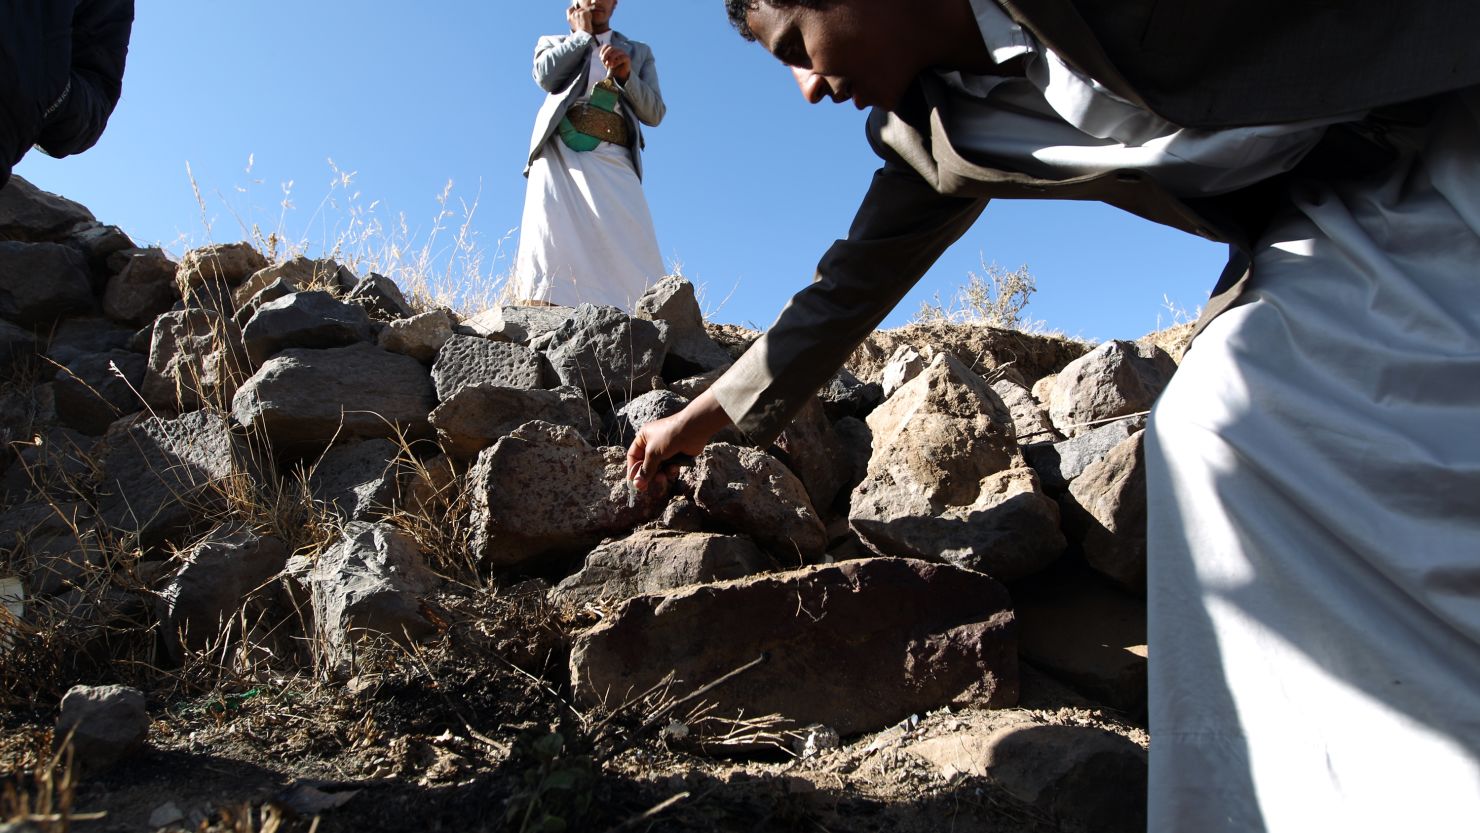 Yemeni men inspect the site where a Saudi diplomat and his bodyguard were killed, in Sanaa on November 28. 